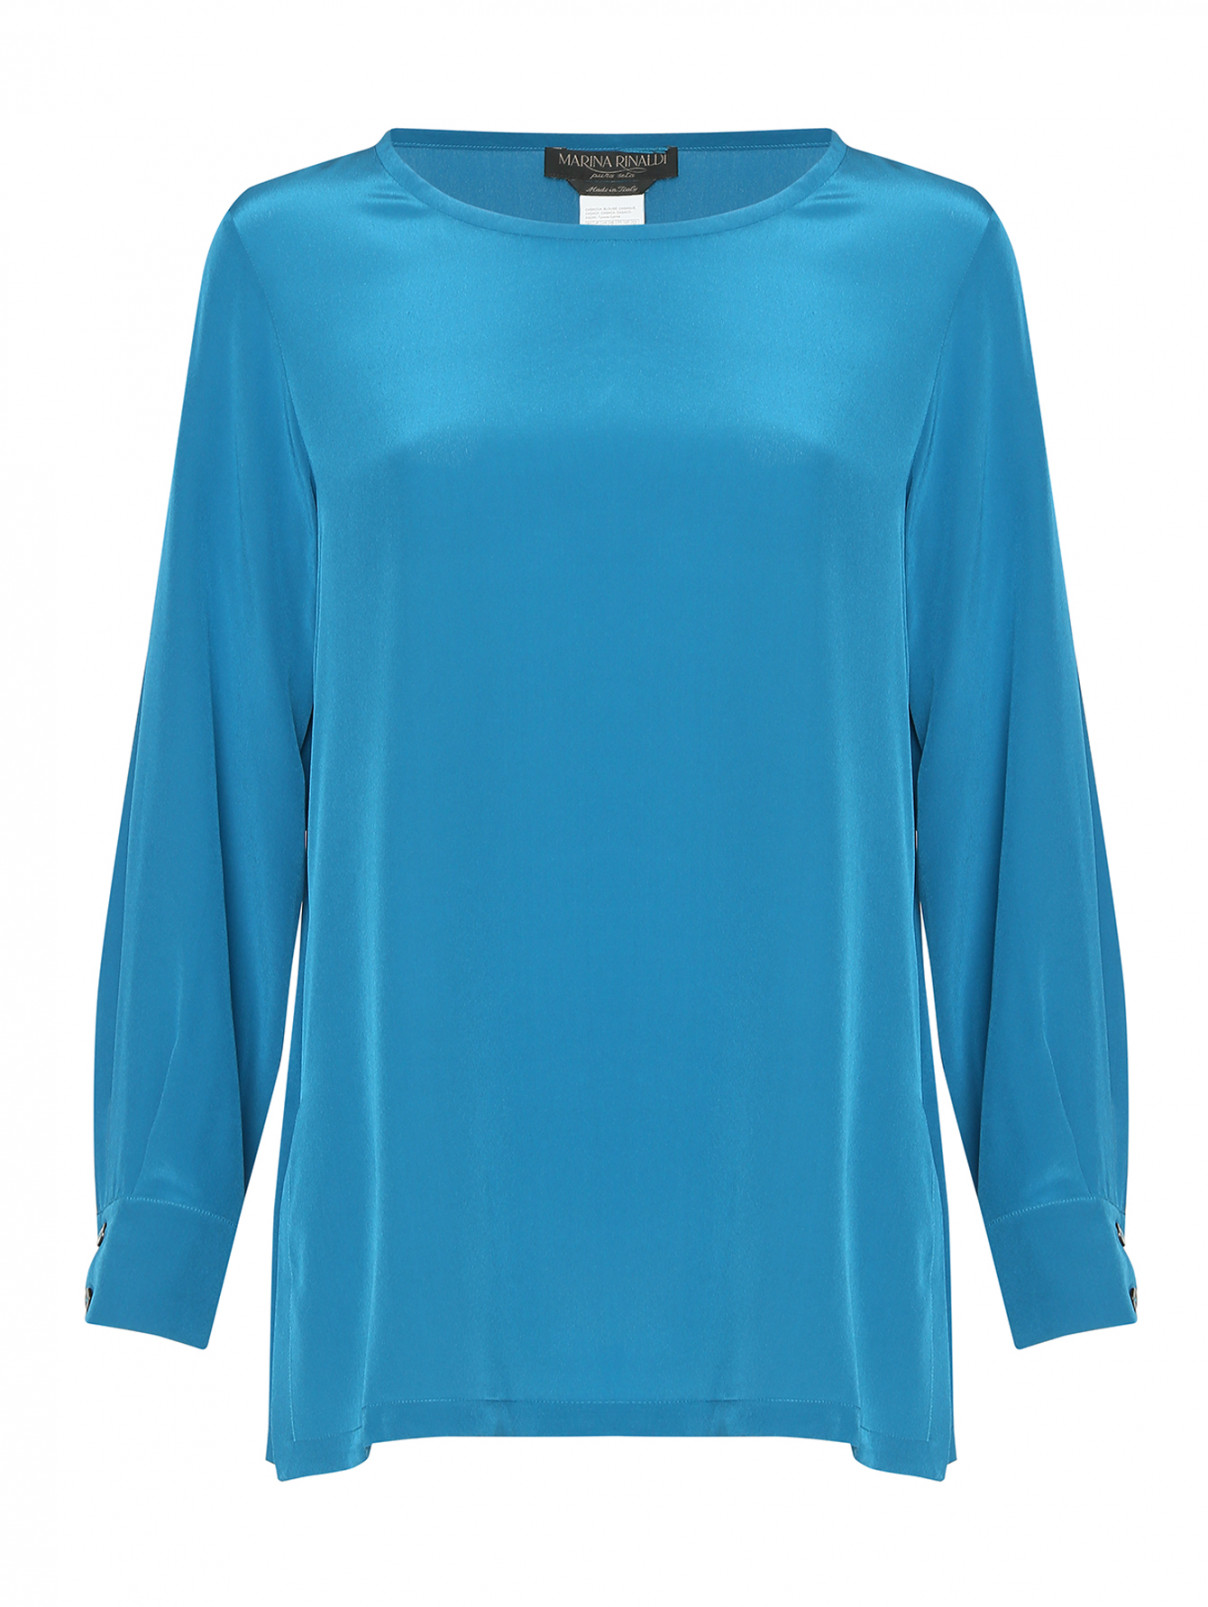 Блуза из шелка Marina Rinaldi  –  Общий вид  – Цвет:  Синий